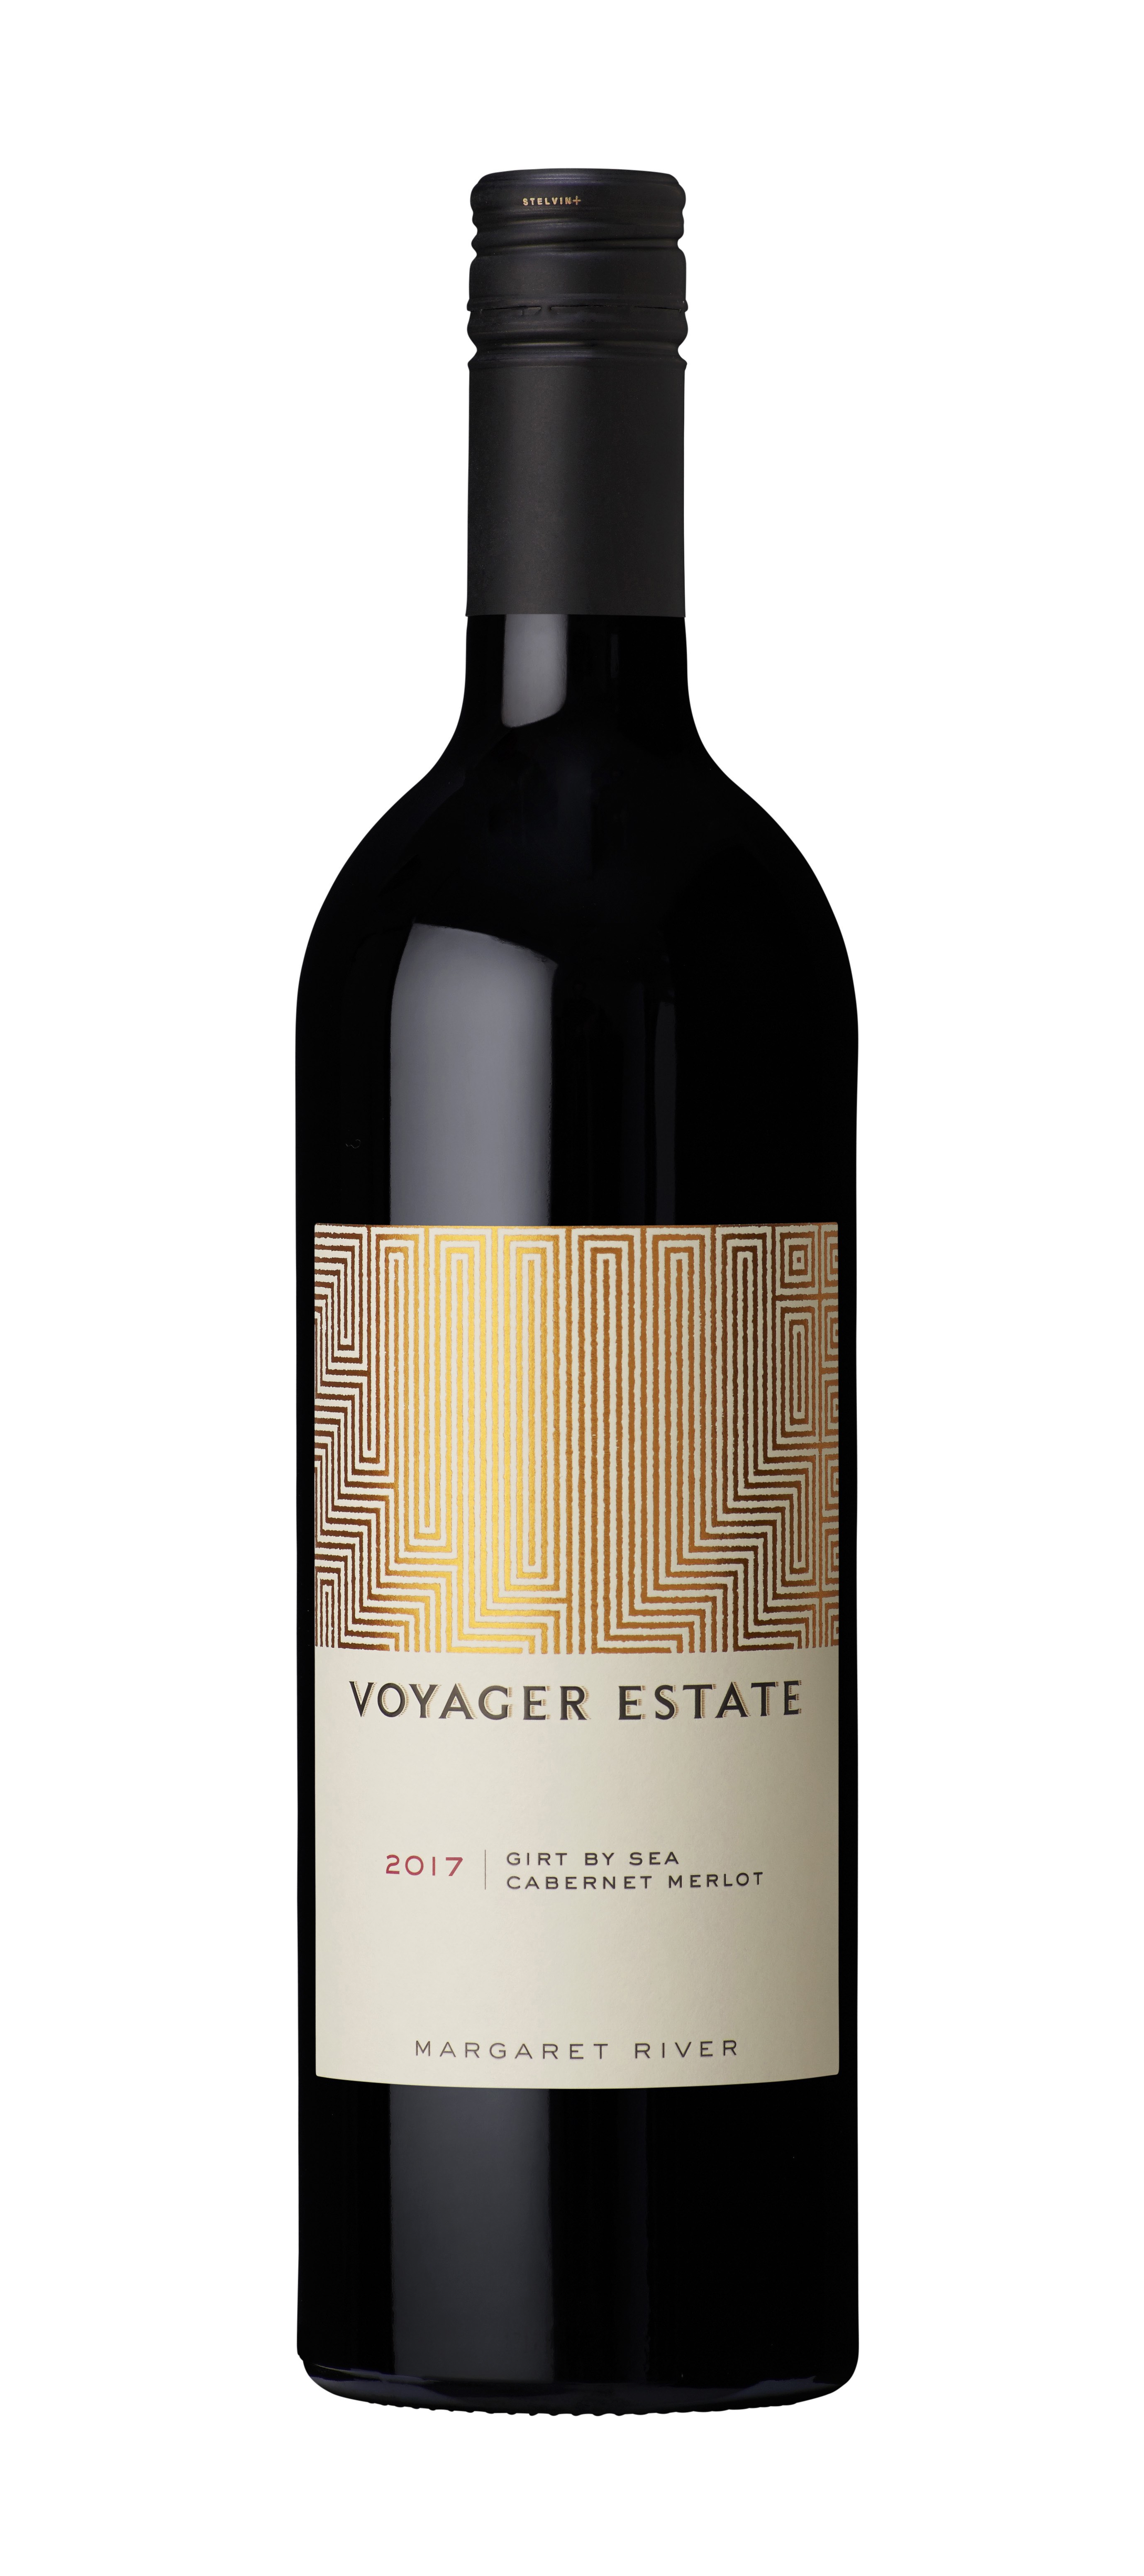 by 2020 Sea Voyager Wine Estate - Goblet Merlot Cabernet Girt